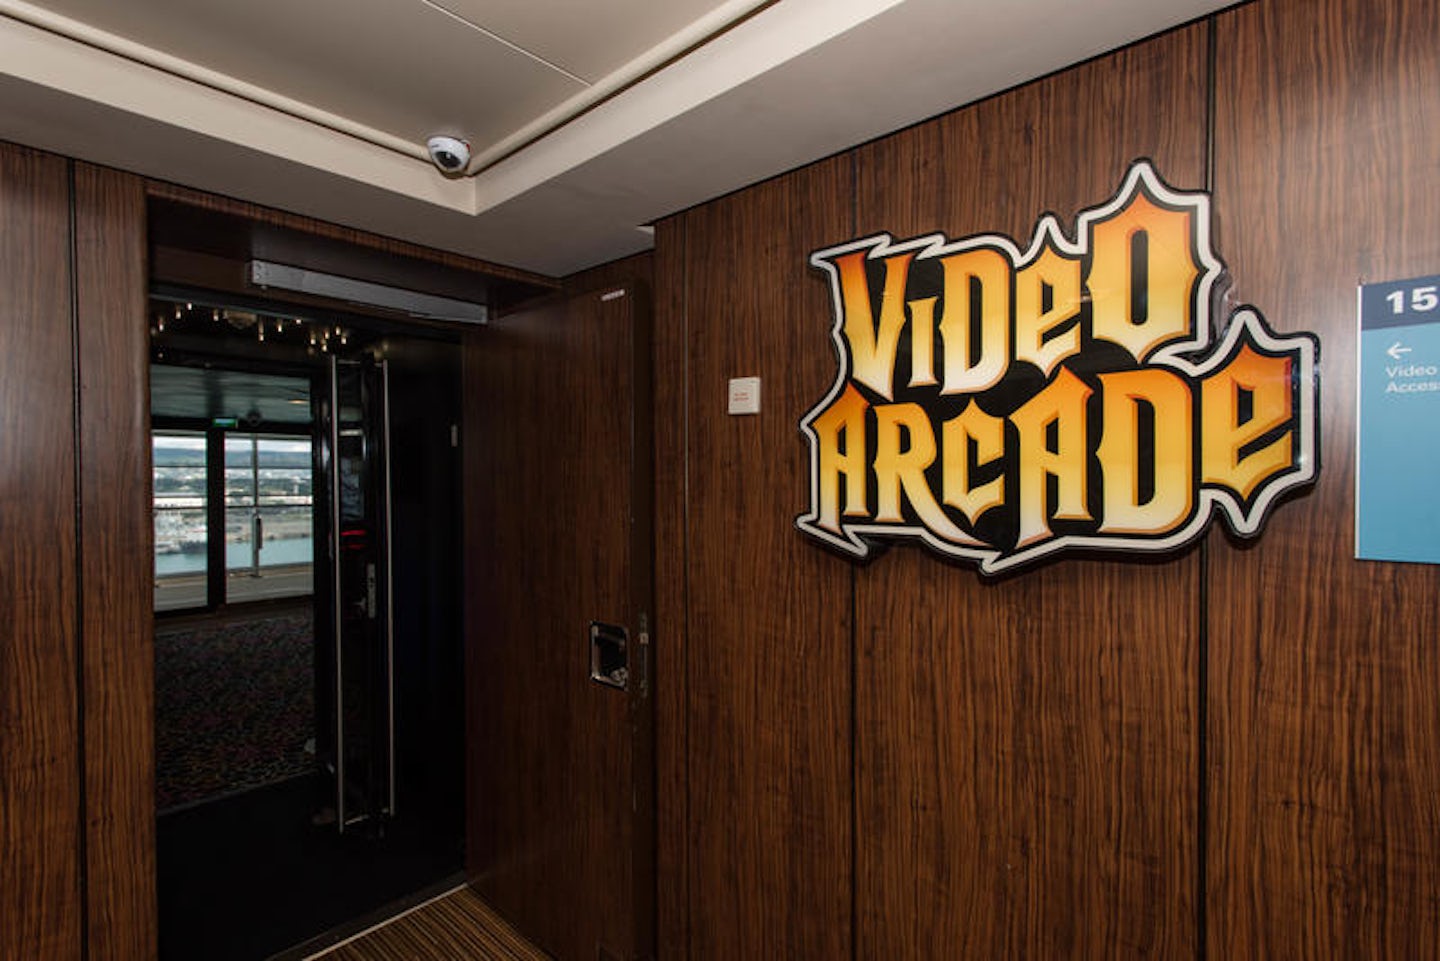 Video Arcade on Norwegian Epic